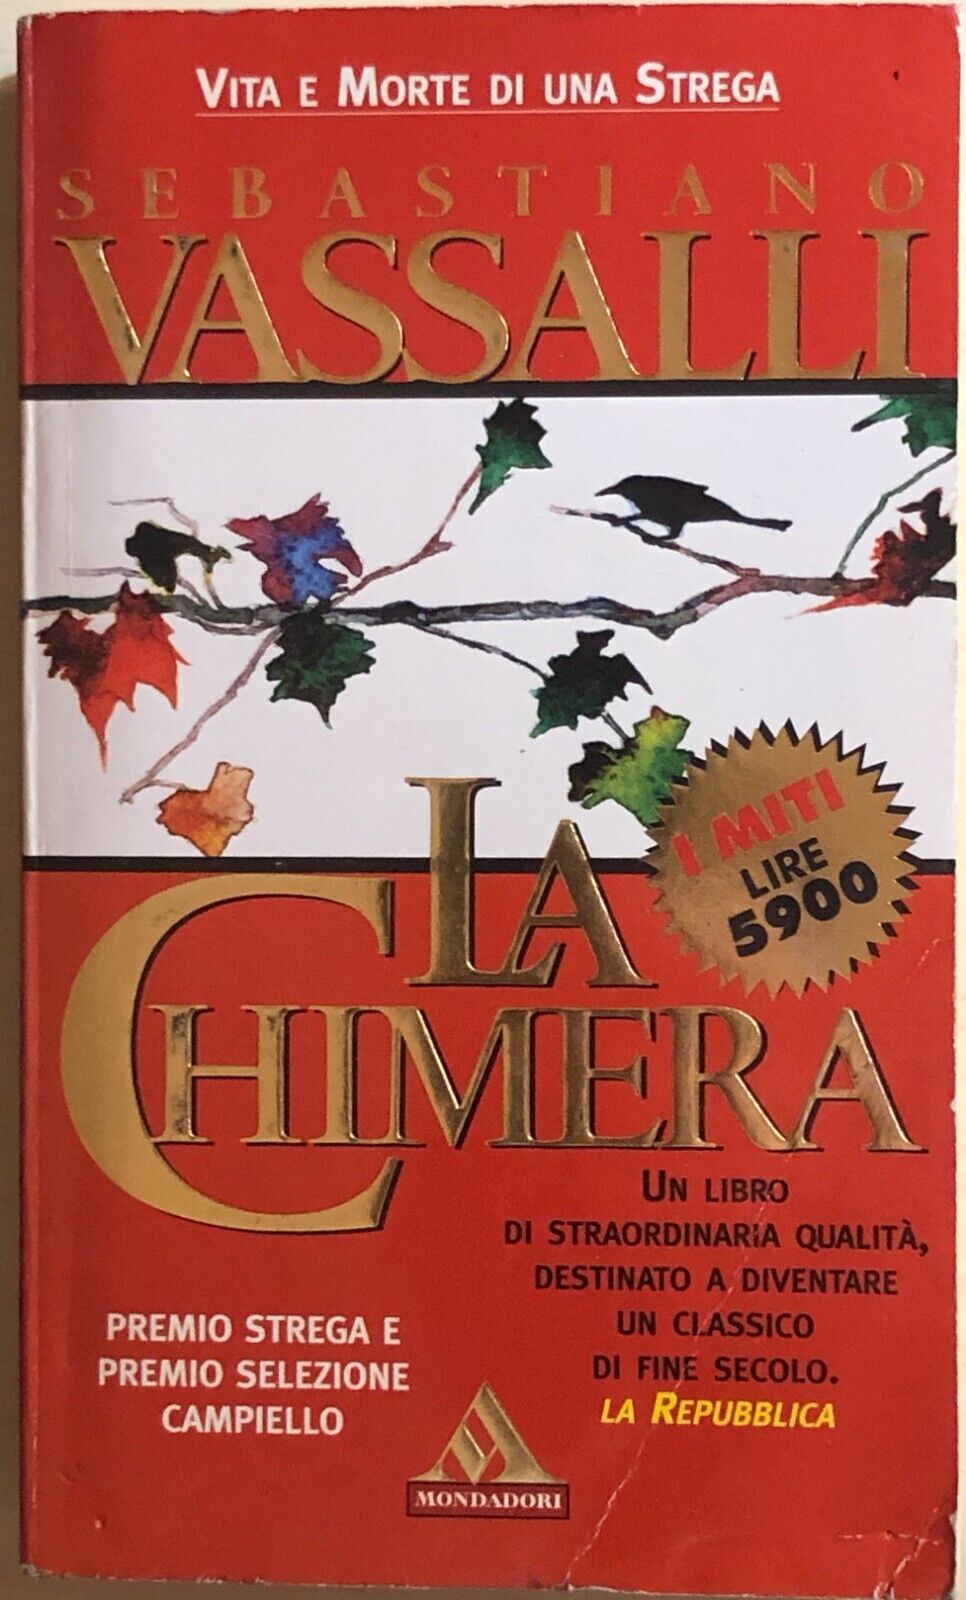 La chimera di Sebastiano Vassalli, 1996, Mondadori